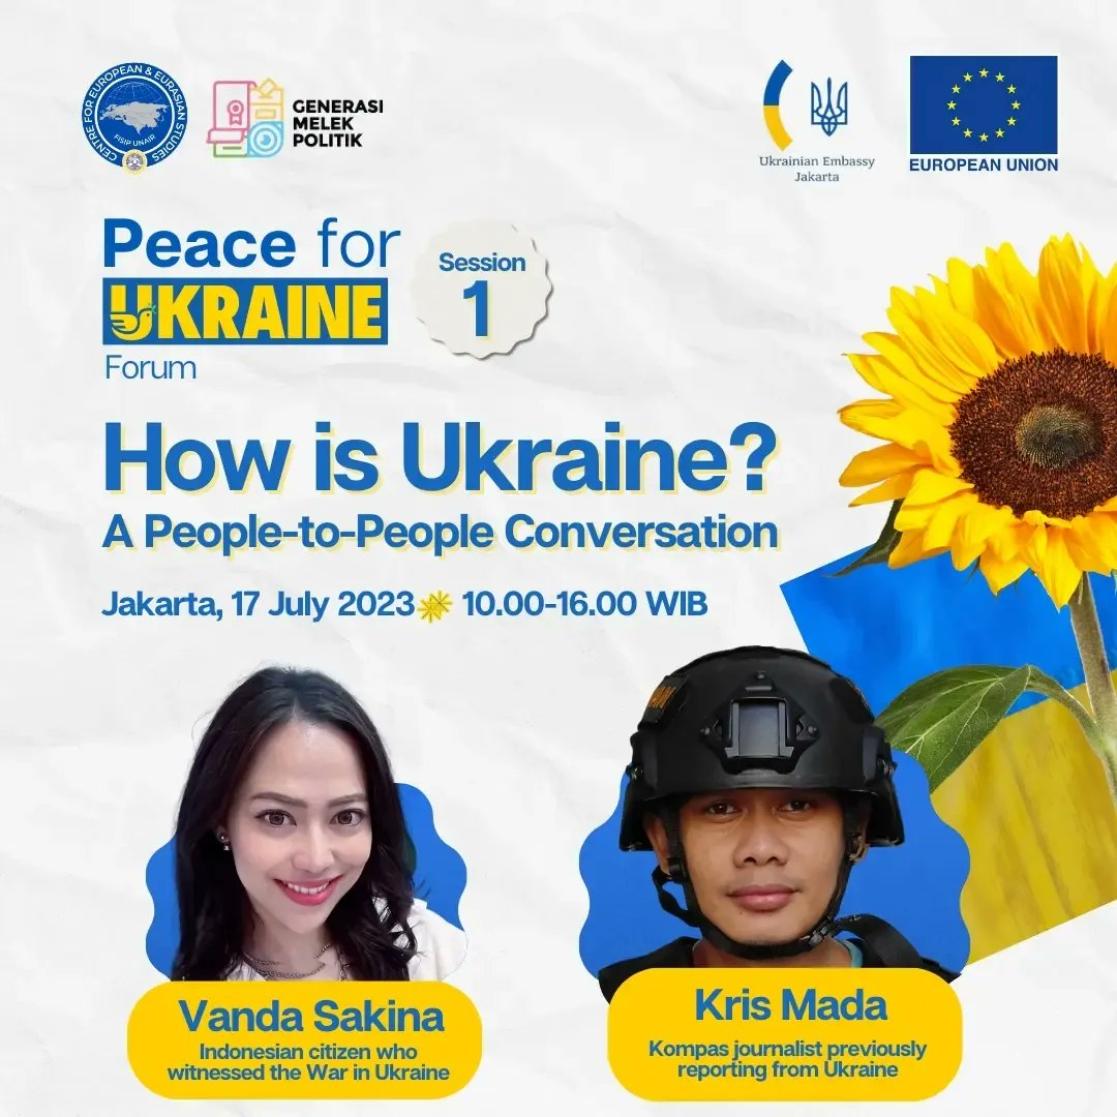 Peace for Ukraine Forum - Session 1